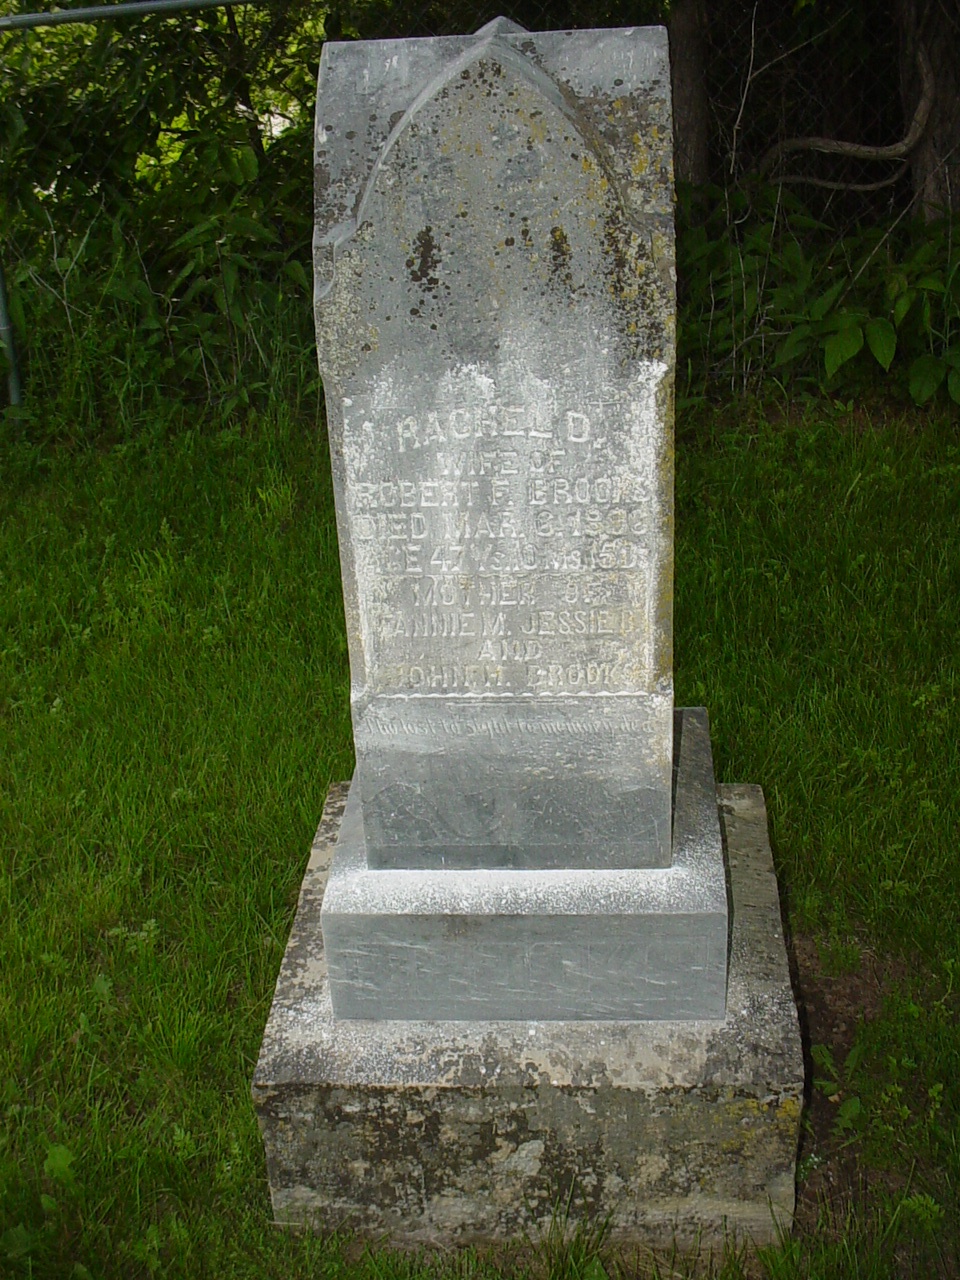  Rachel D. Brooks Headstone Photo, Old Prospect Methodist Cemetery, Callaway County genealogy